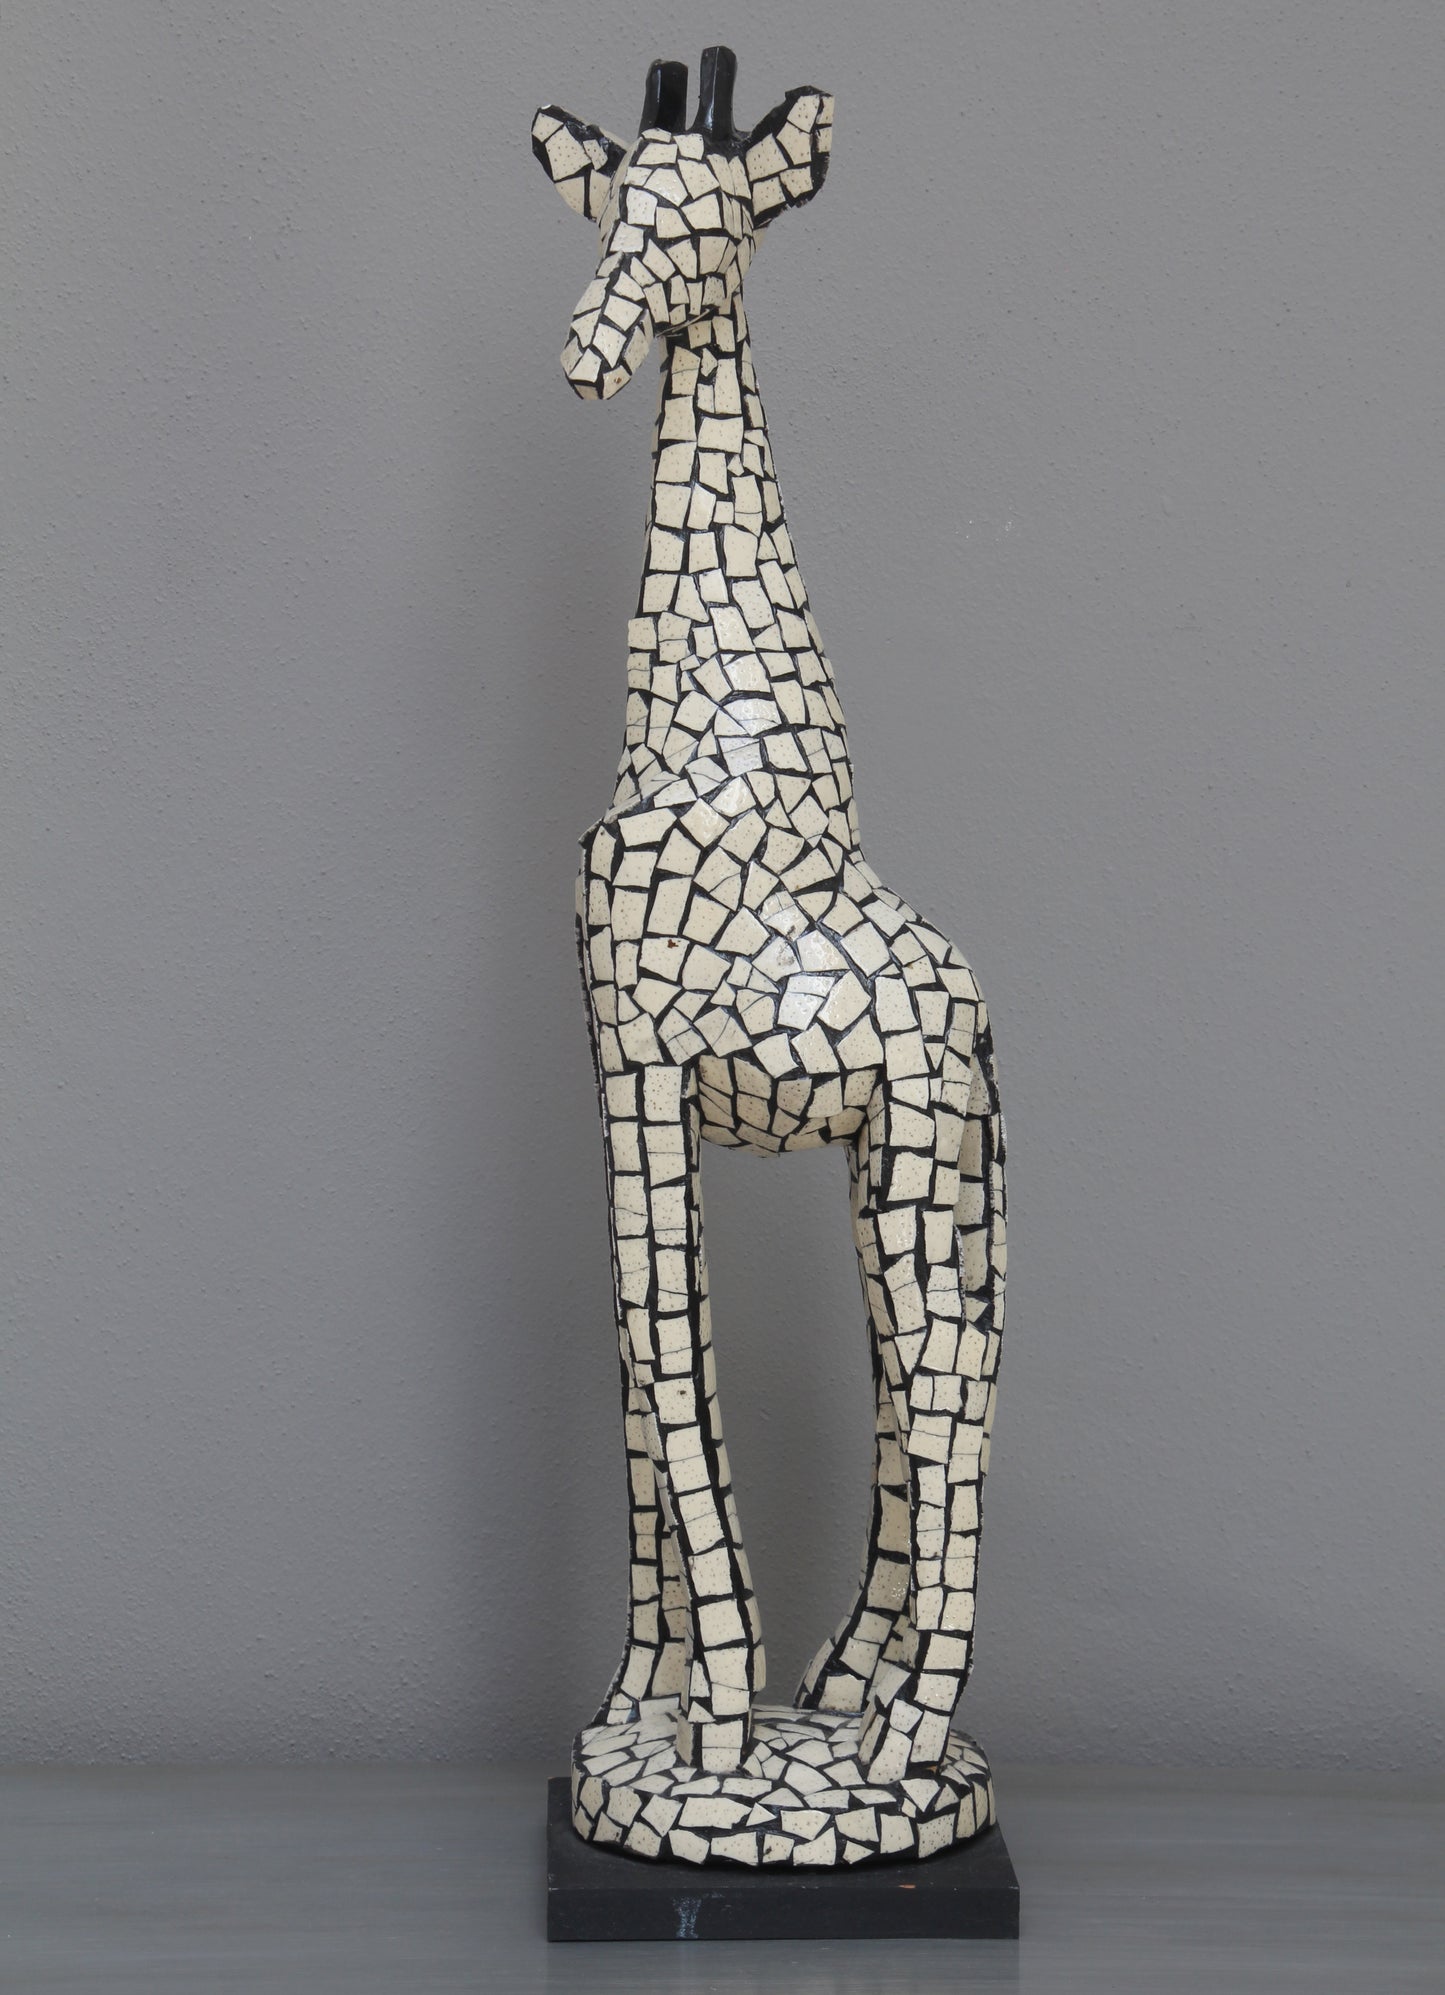 Mosaic eggshell full giraffe